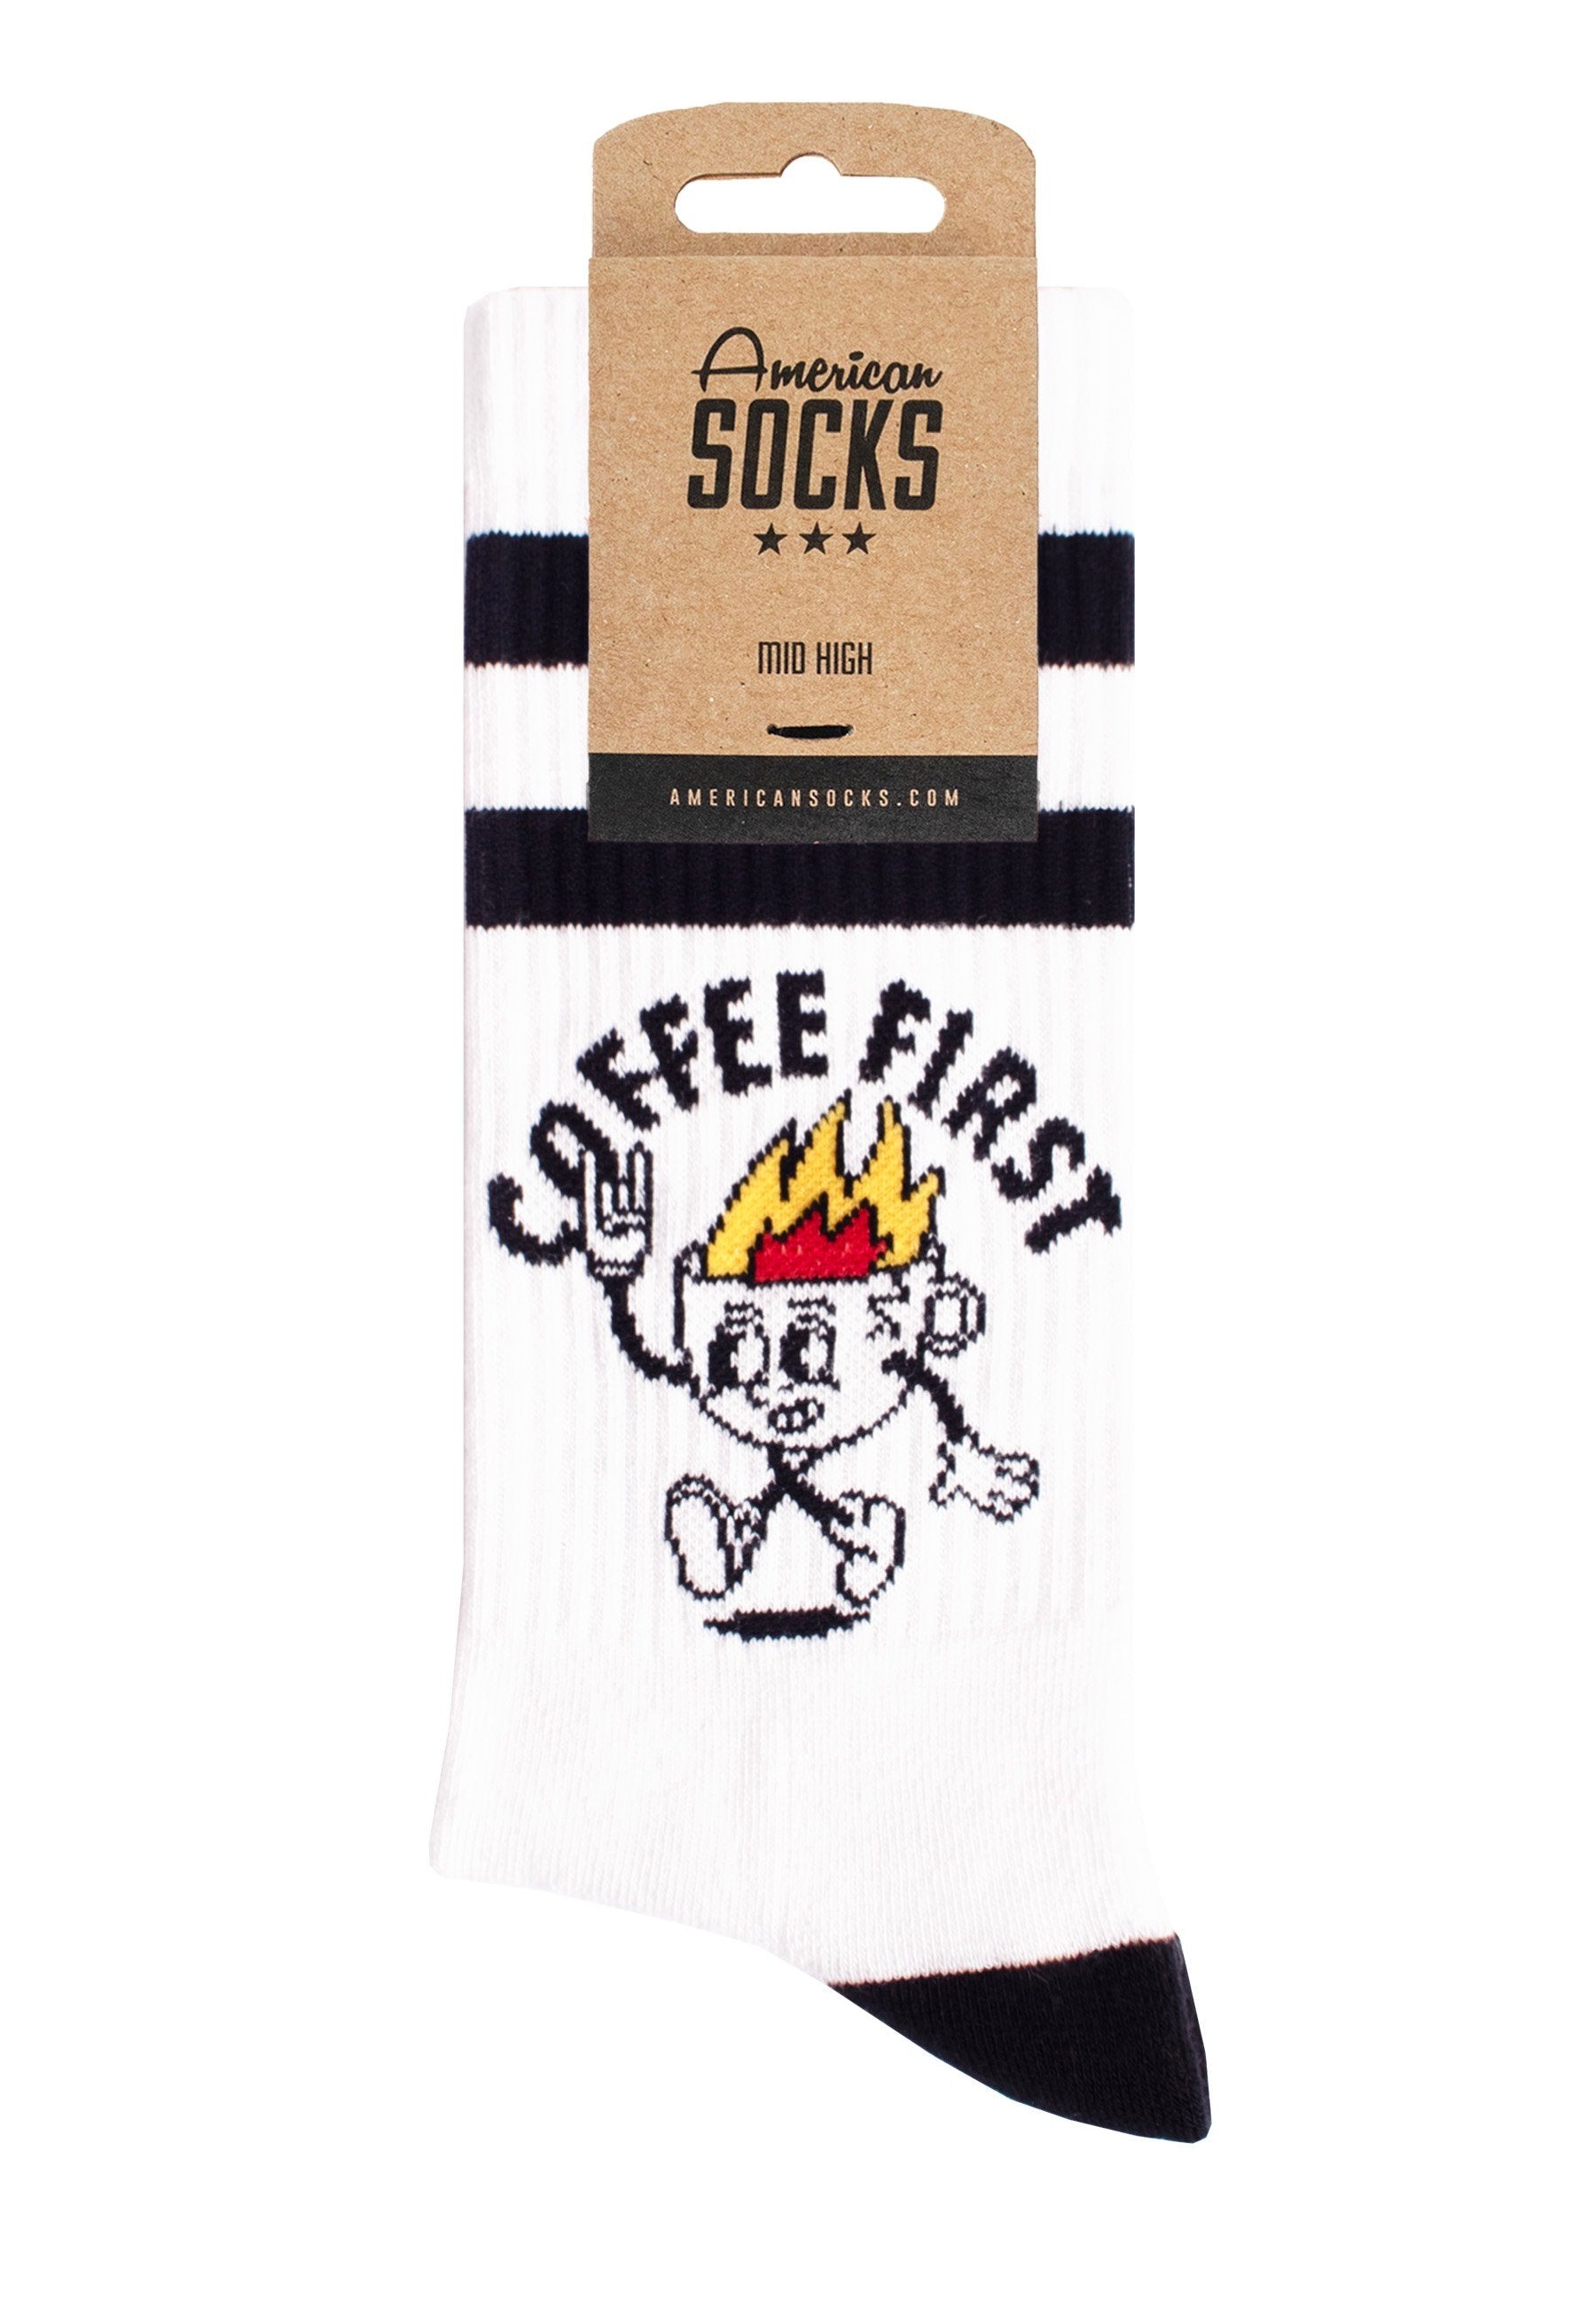 American Socks - Coffee First Mid High White - Socks